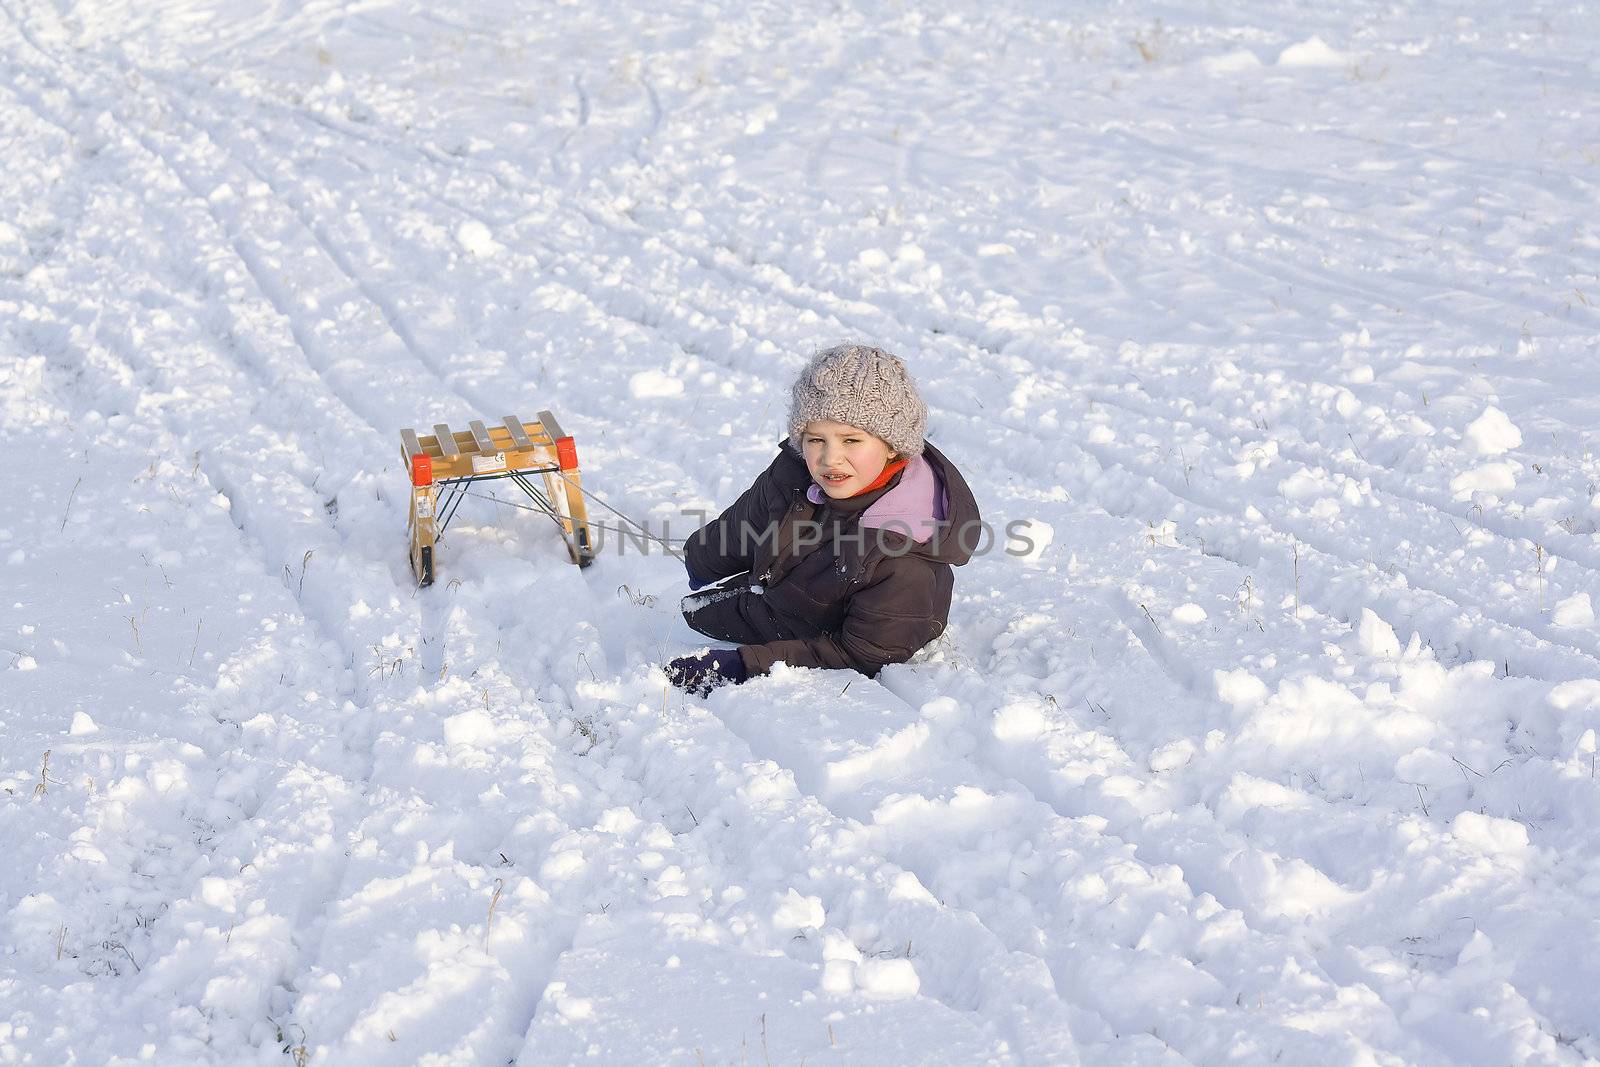  Little girl on snow

